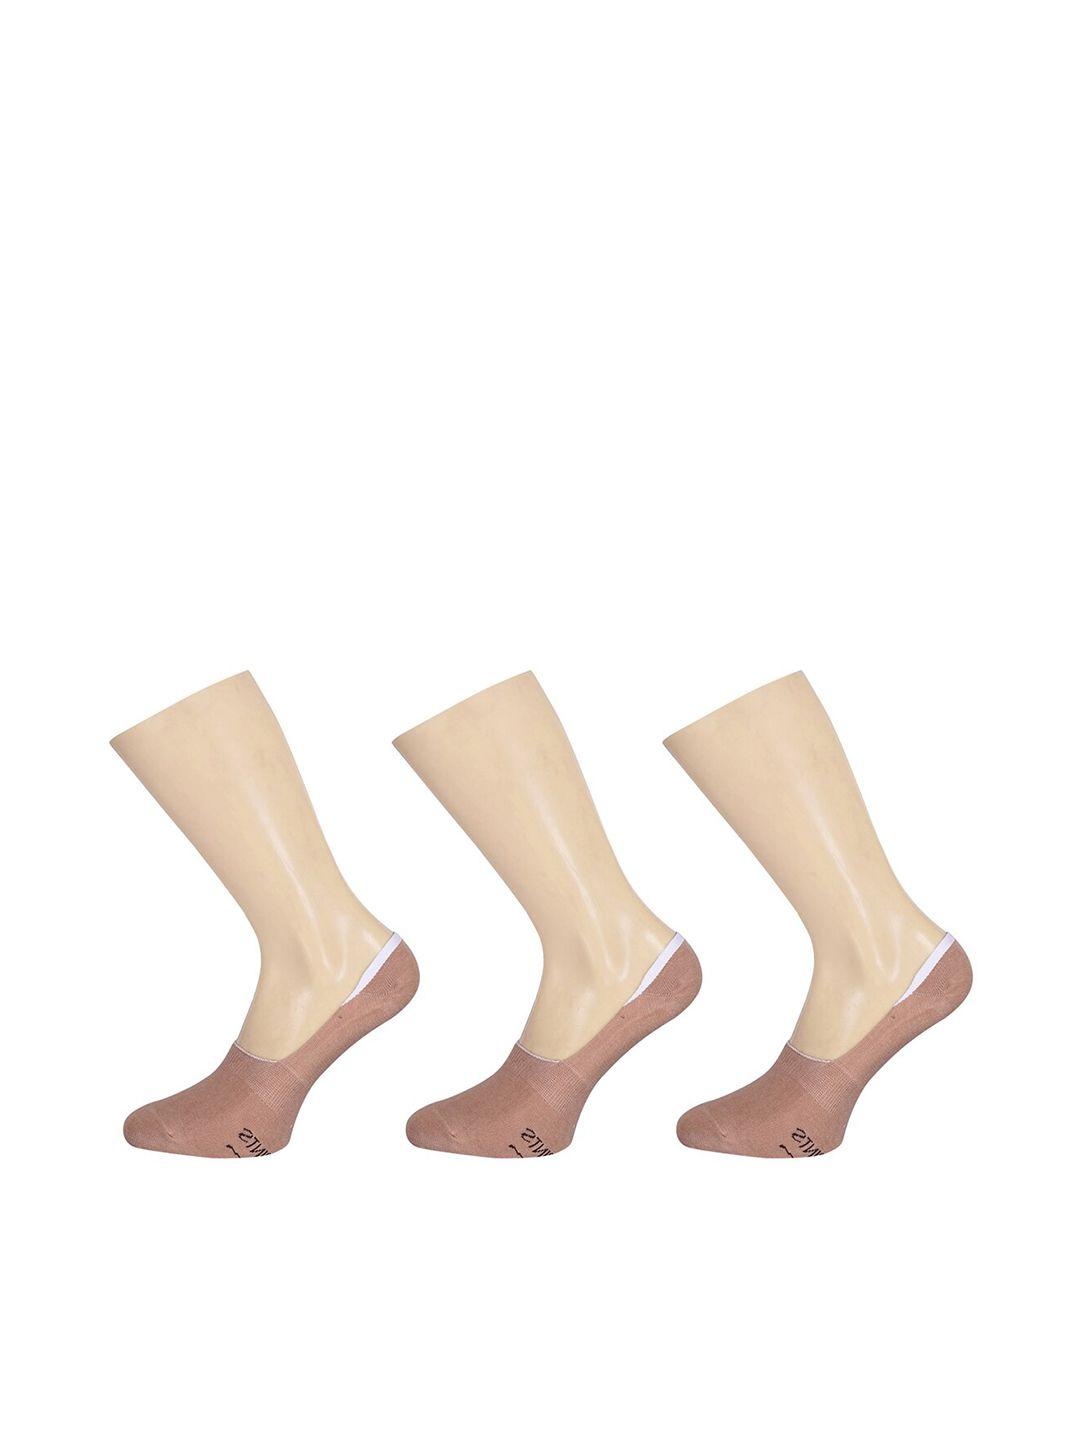 footprints unisex pack of 3 beige shoe liners organic cotton & bamboo socks